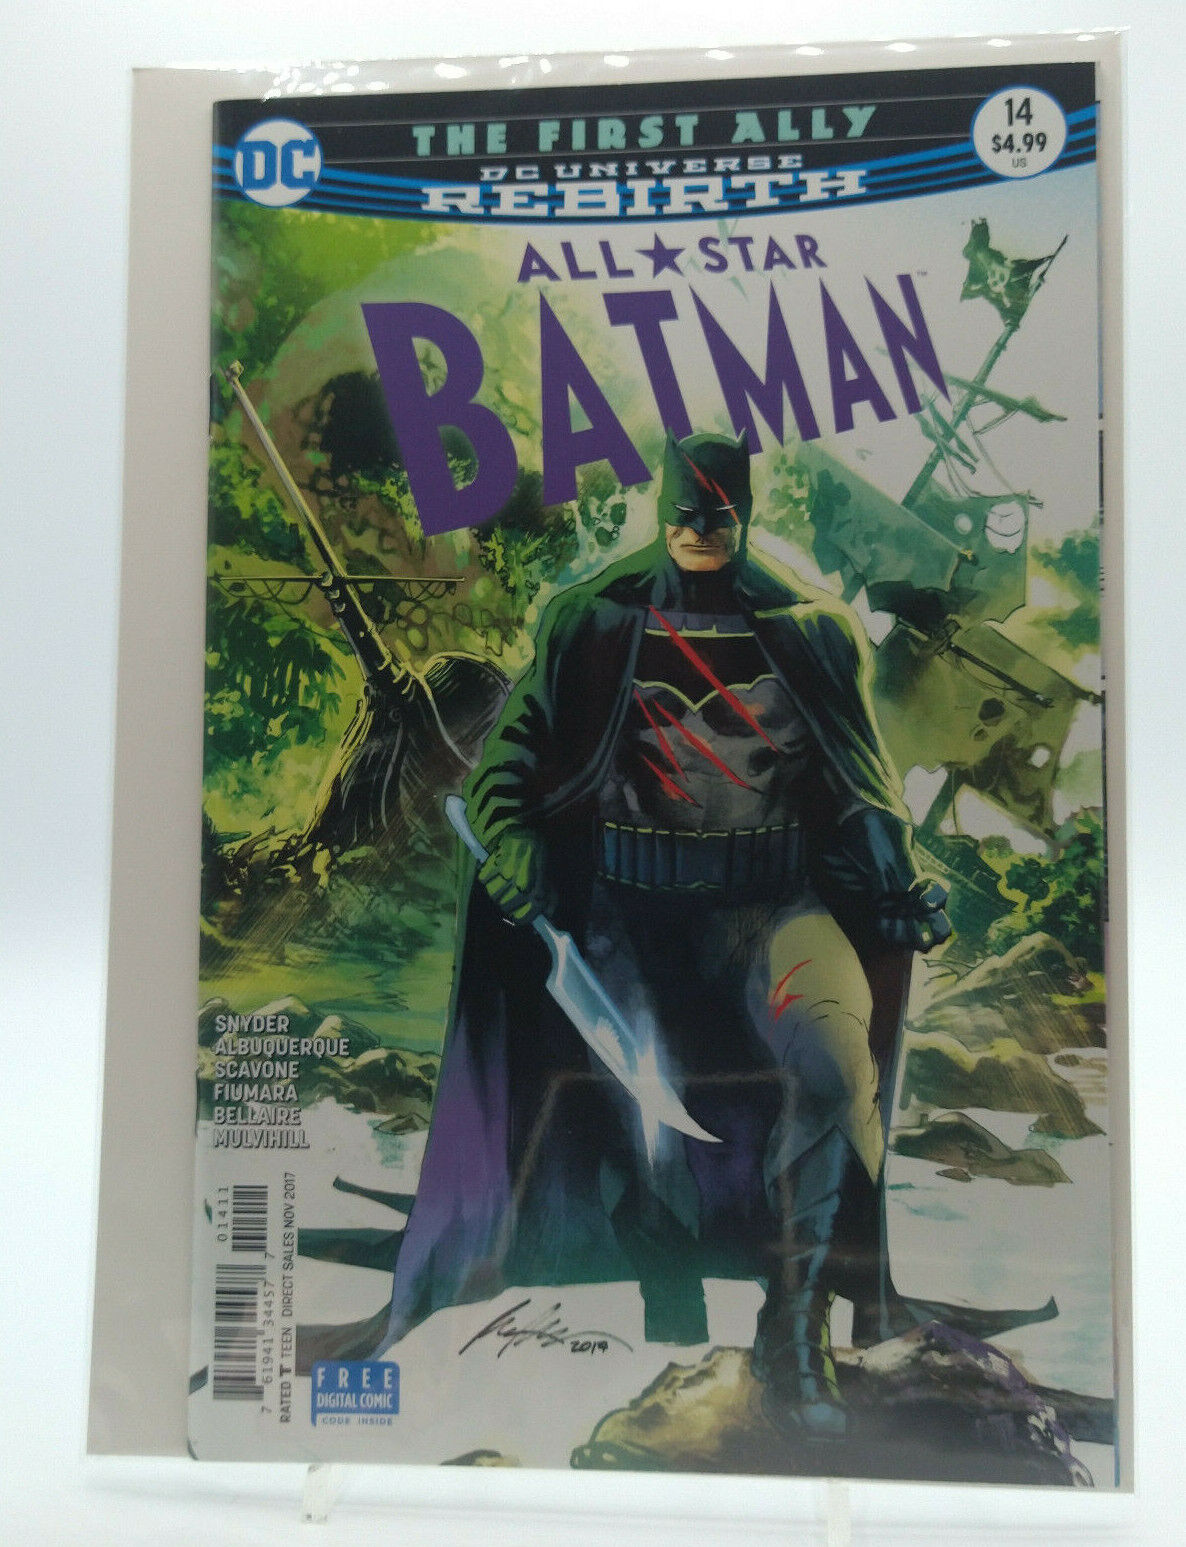 All Star Batman #14 2017 DC Comics VF